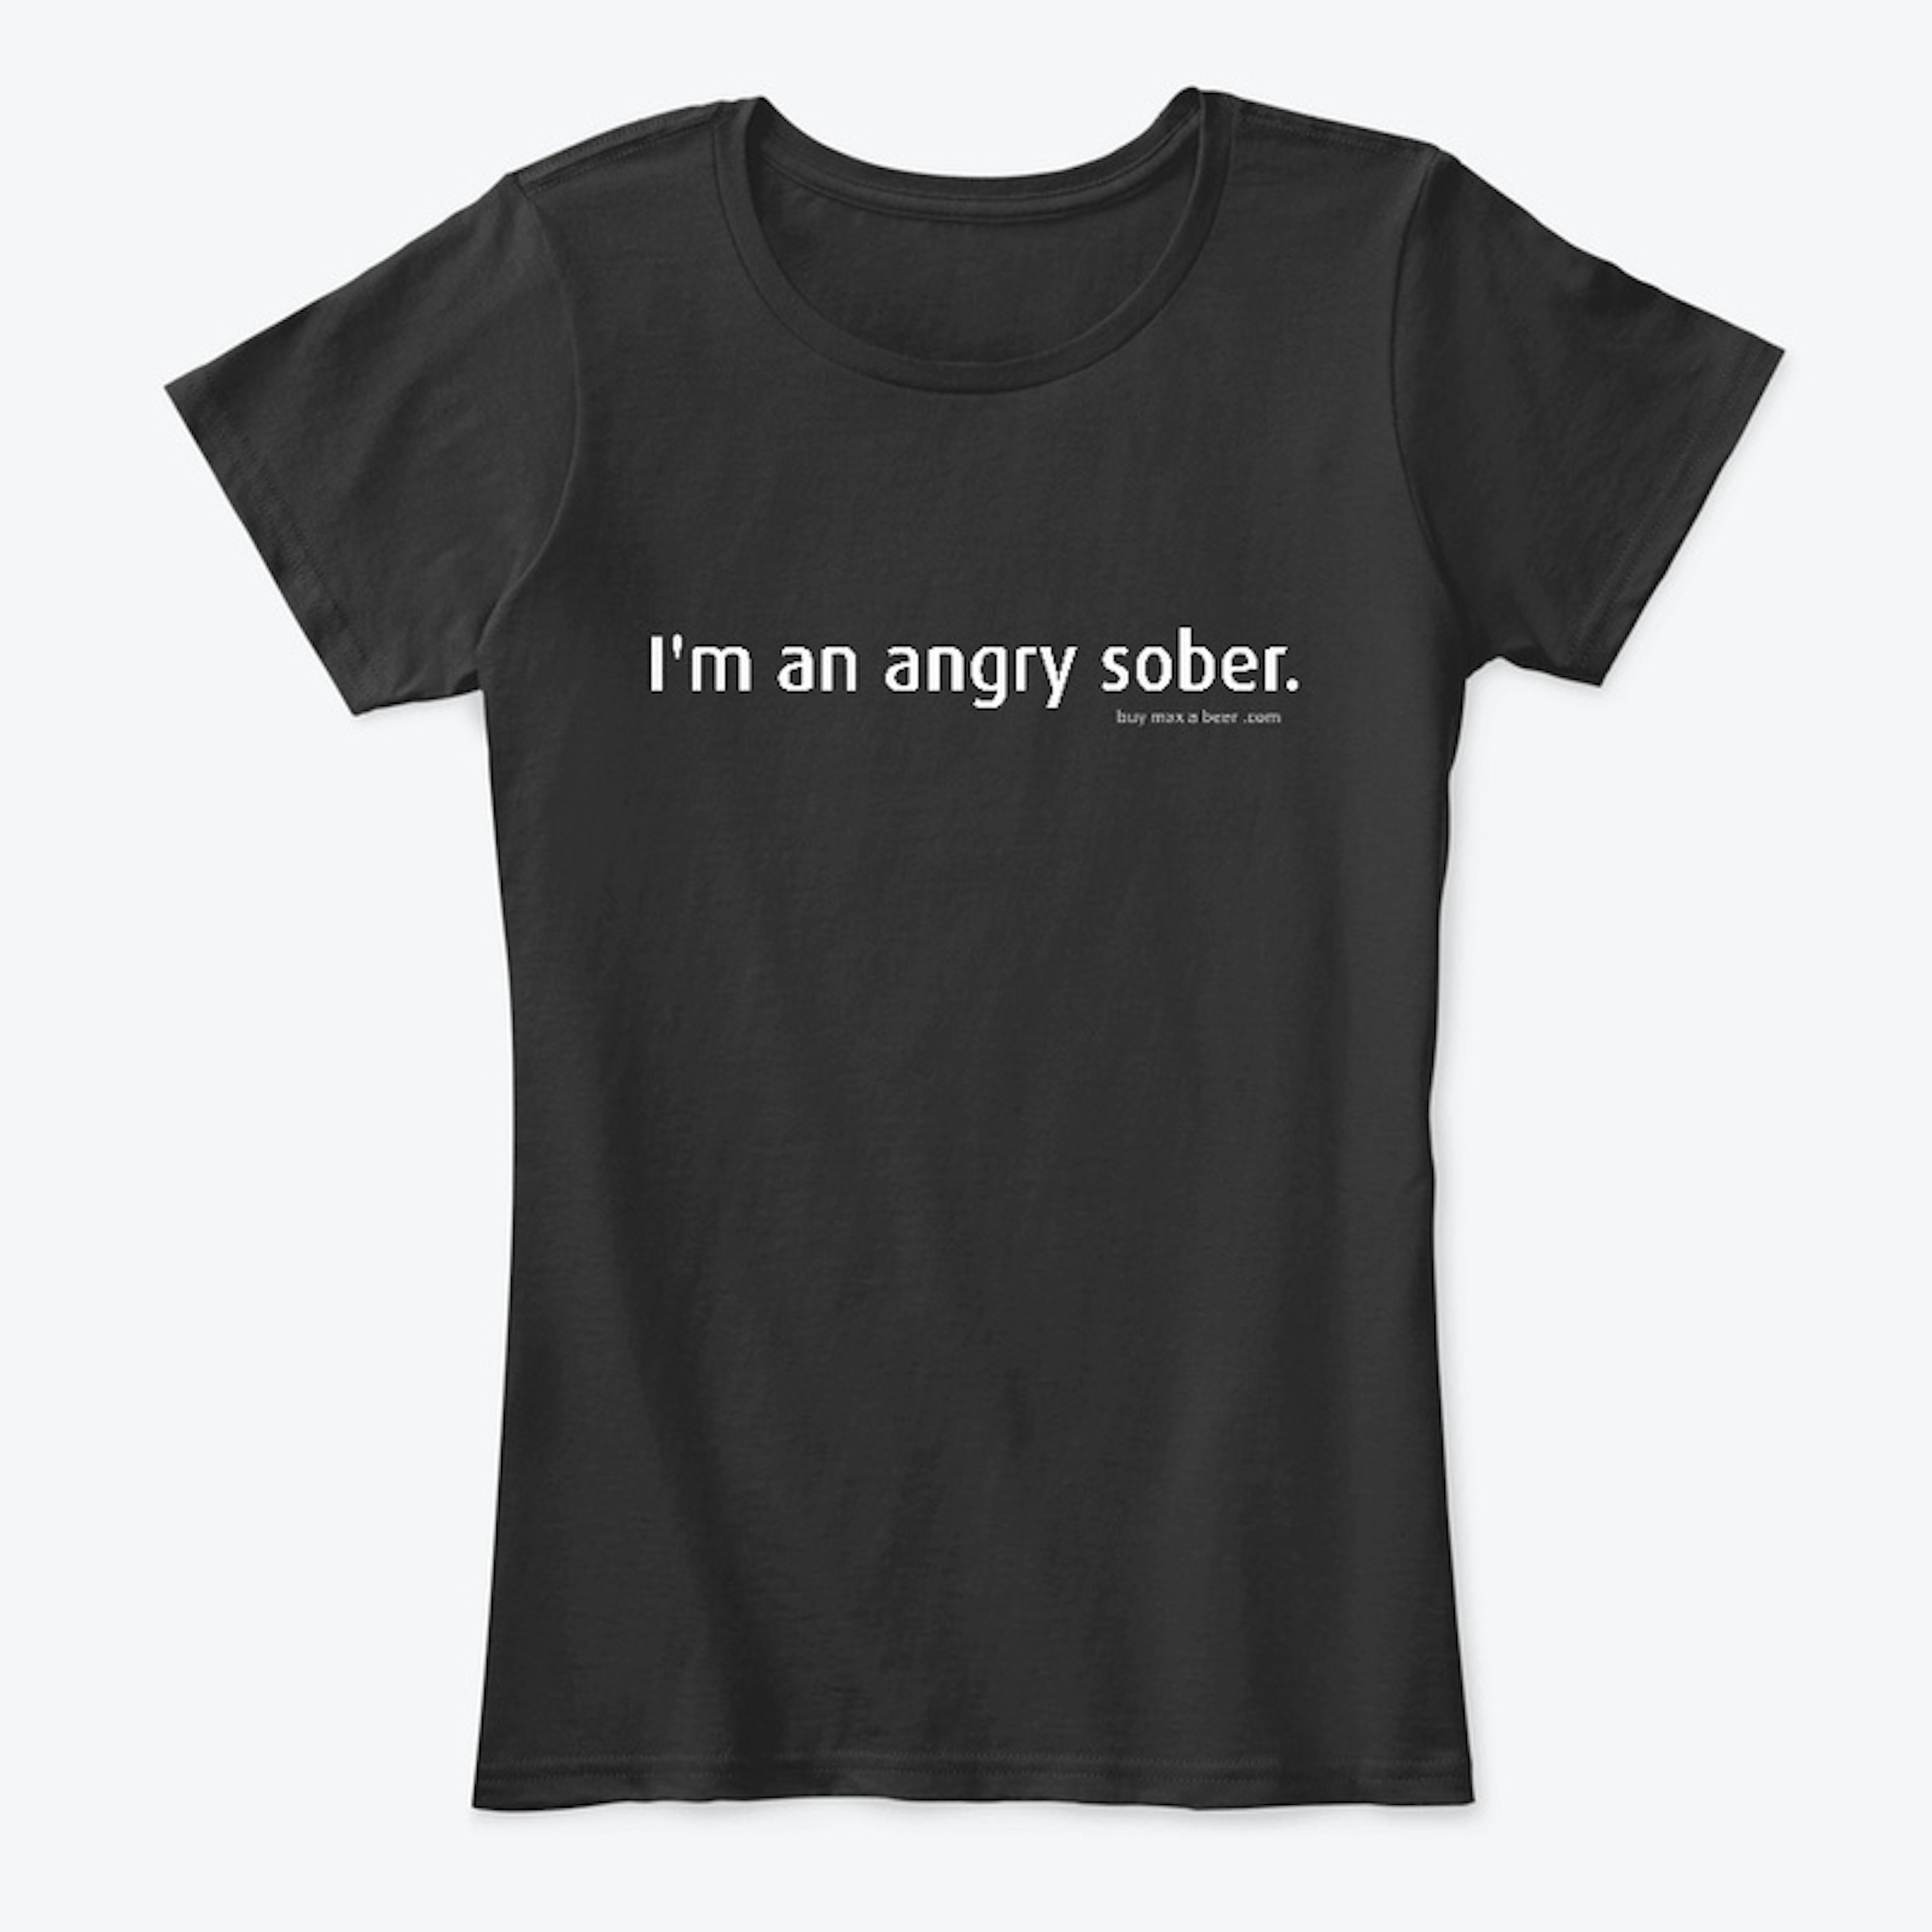 I'm an angry sober